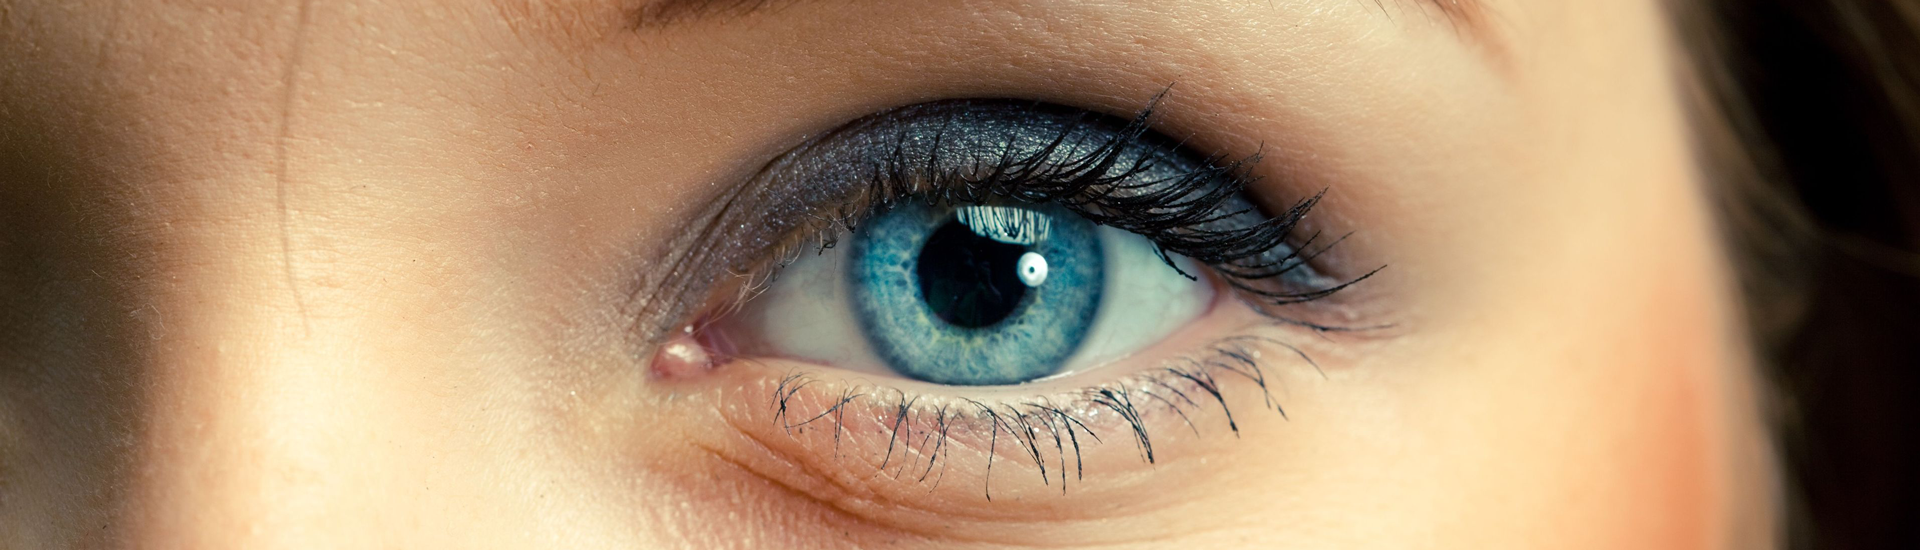 blue eyeball close up photo